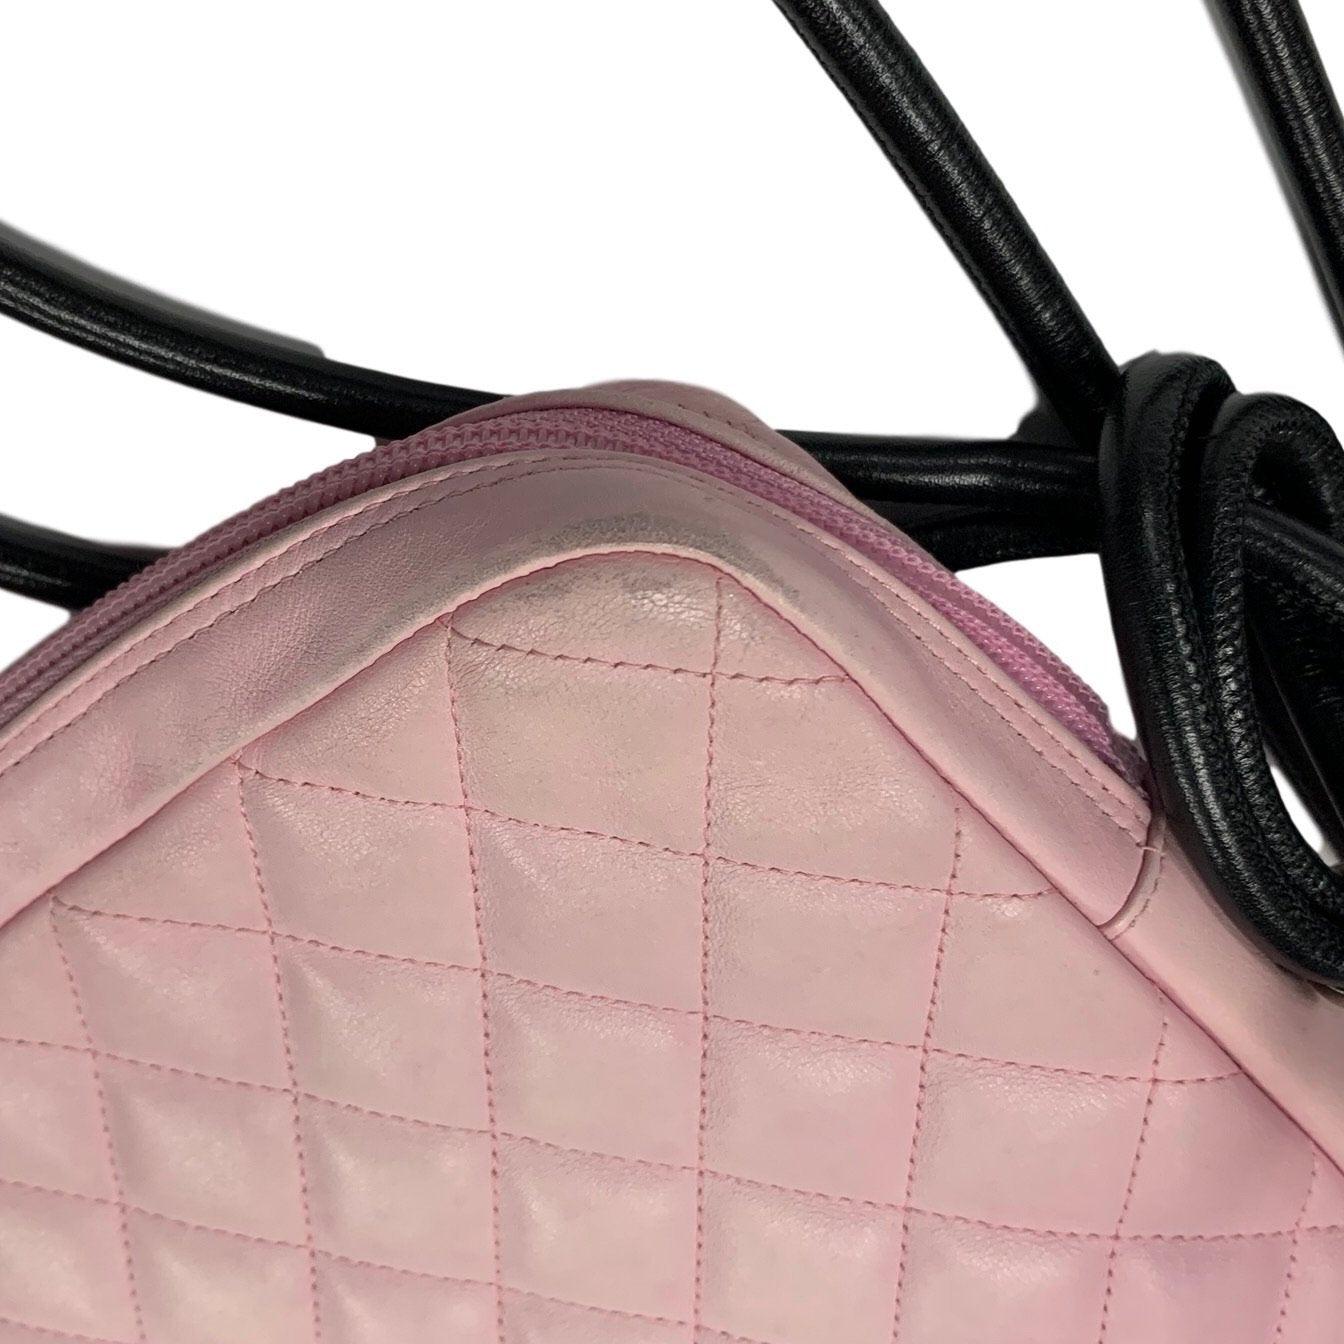 Chanel Pink and Black Large Cambon Crossbody - Handbags